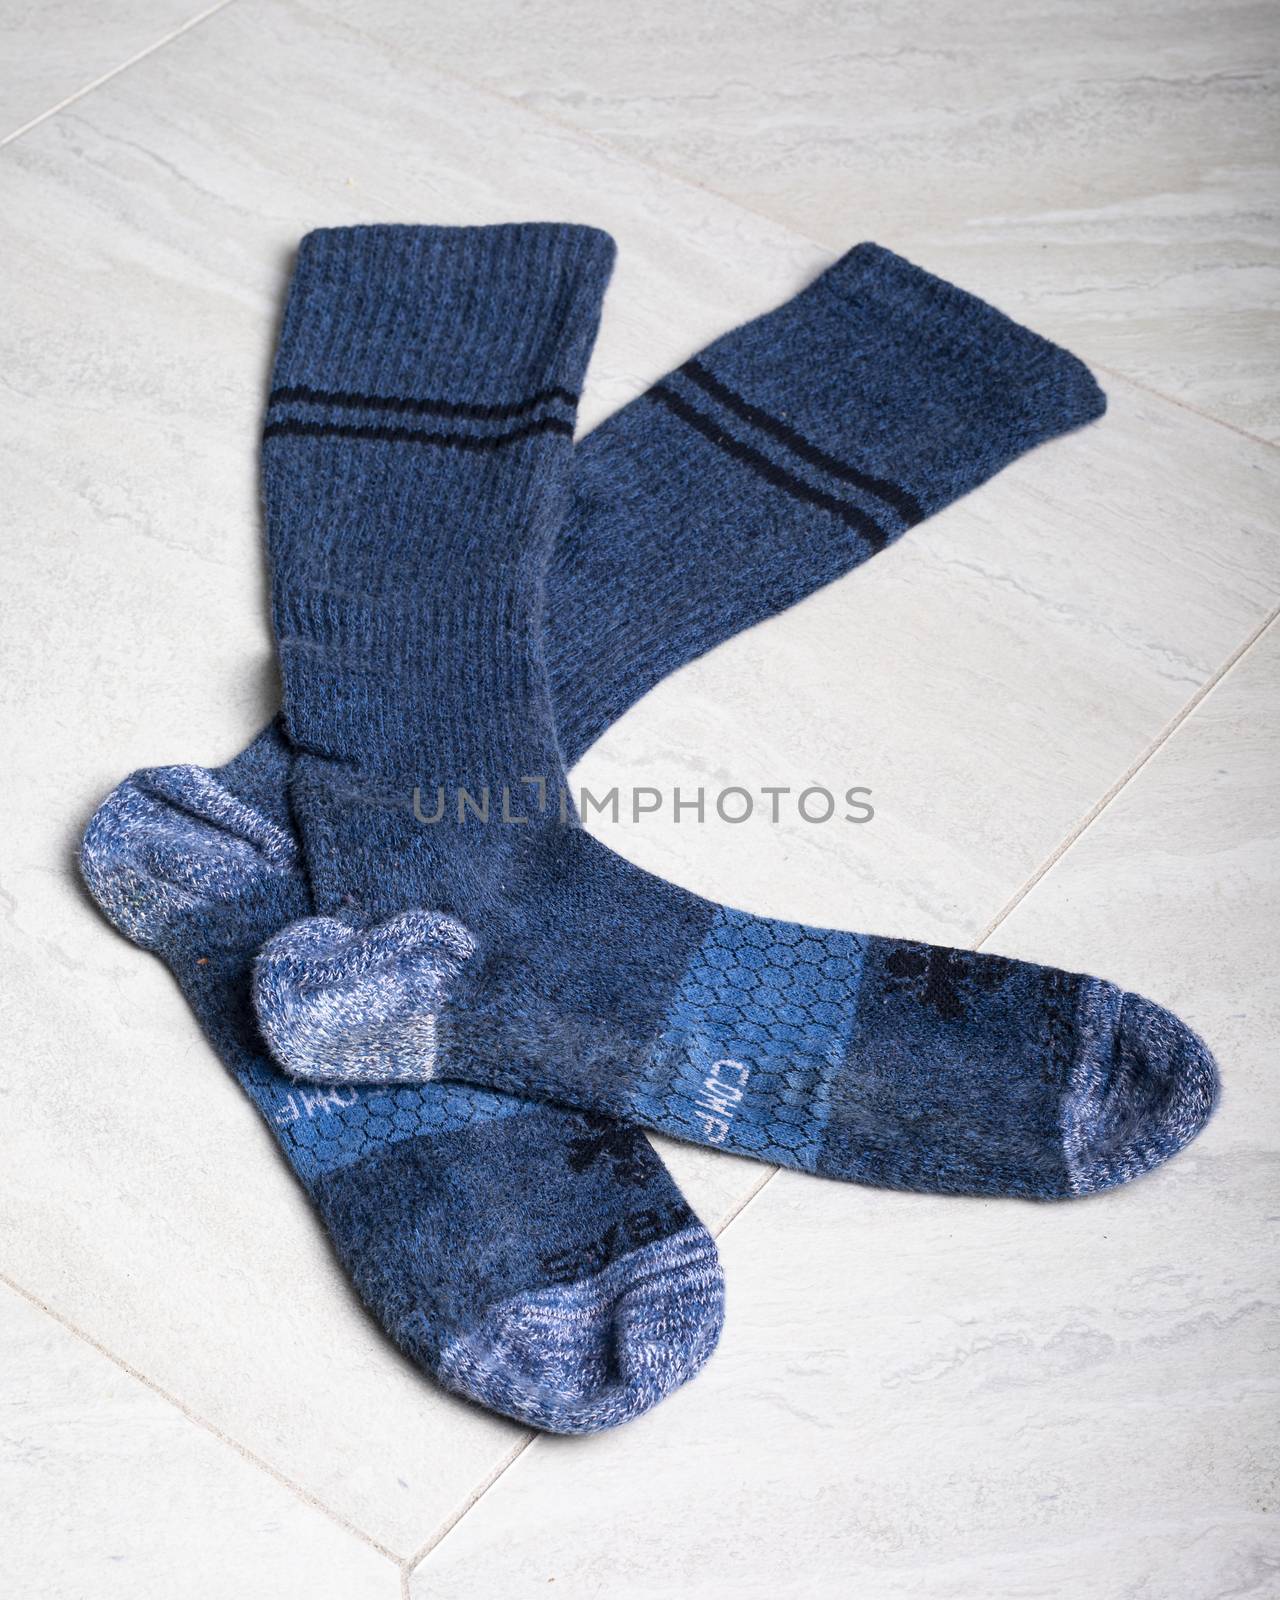 Bombas blue compression socks by CharlieFloyd